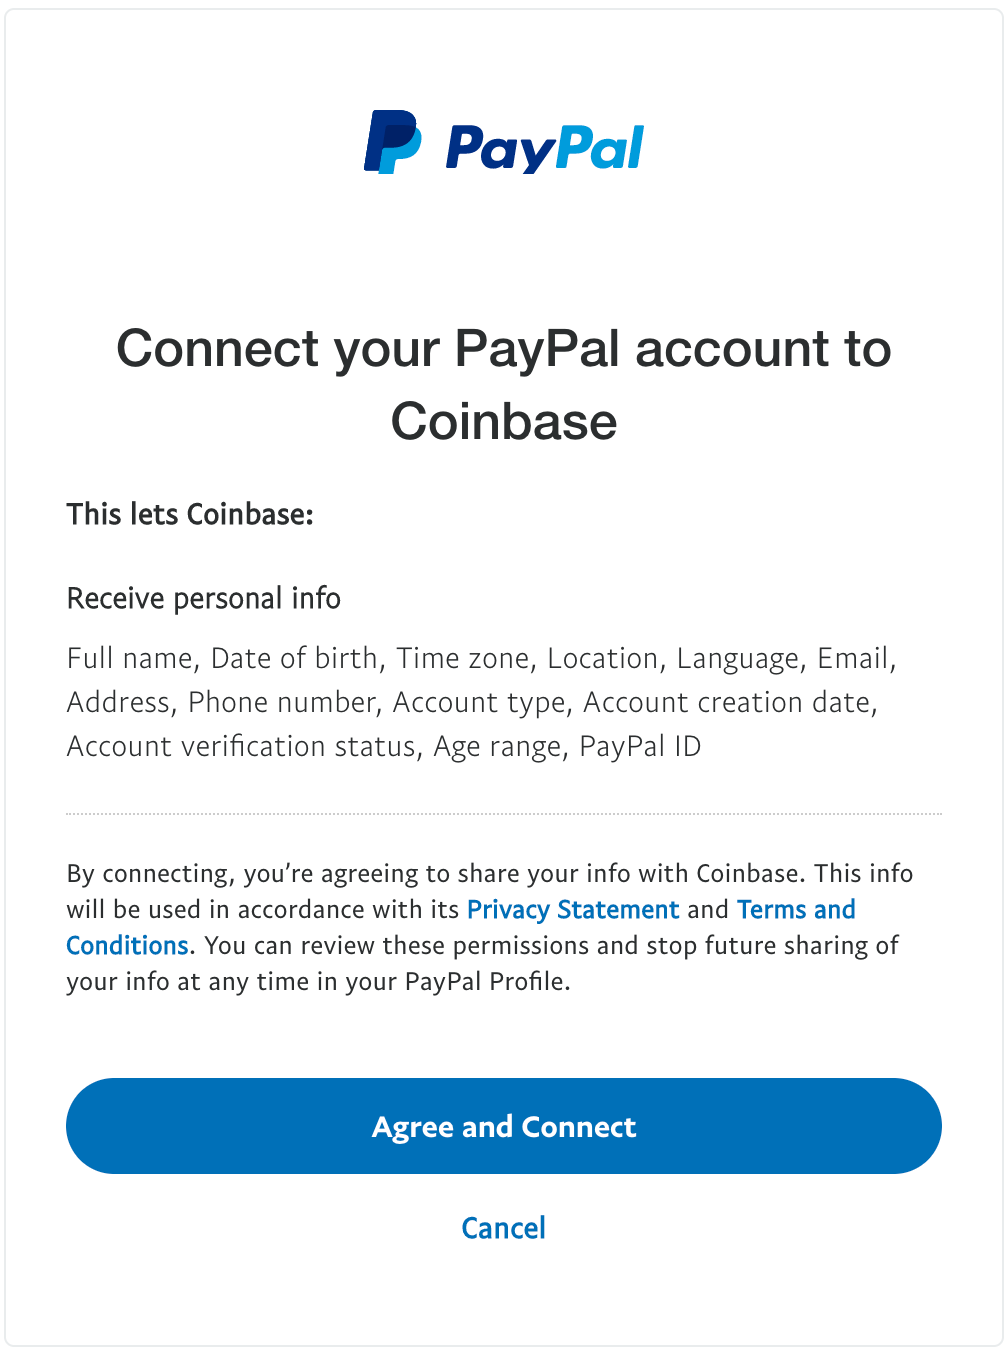 Vincula tu cuenta de PayPal a Coinbase